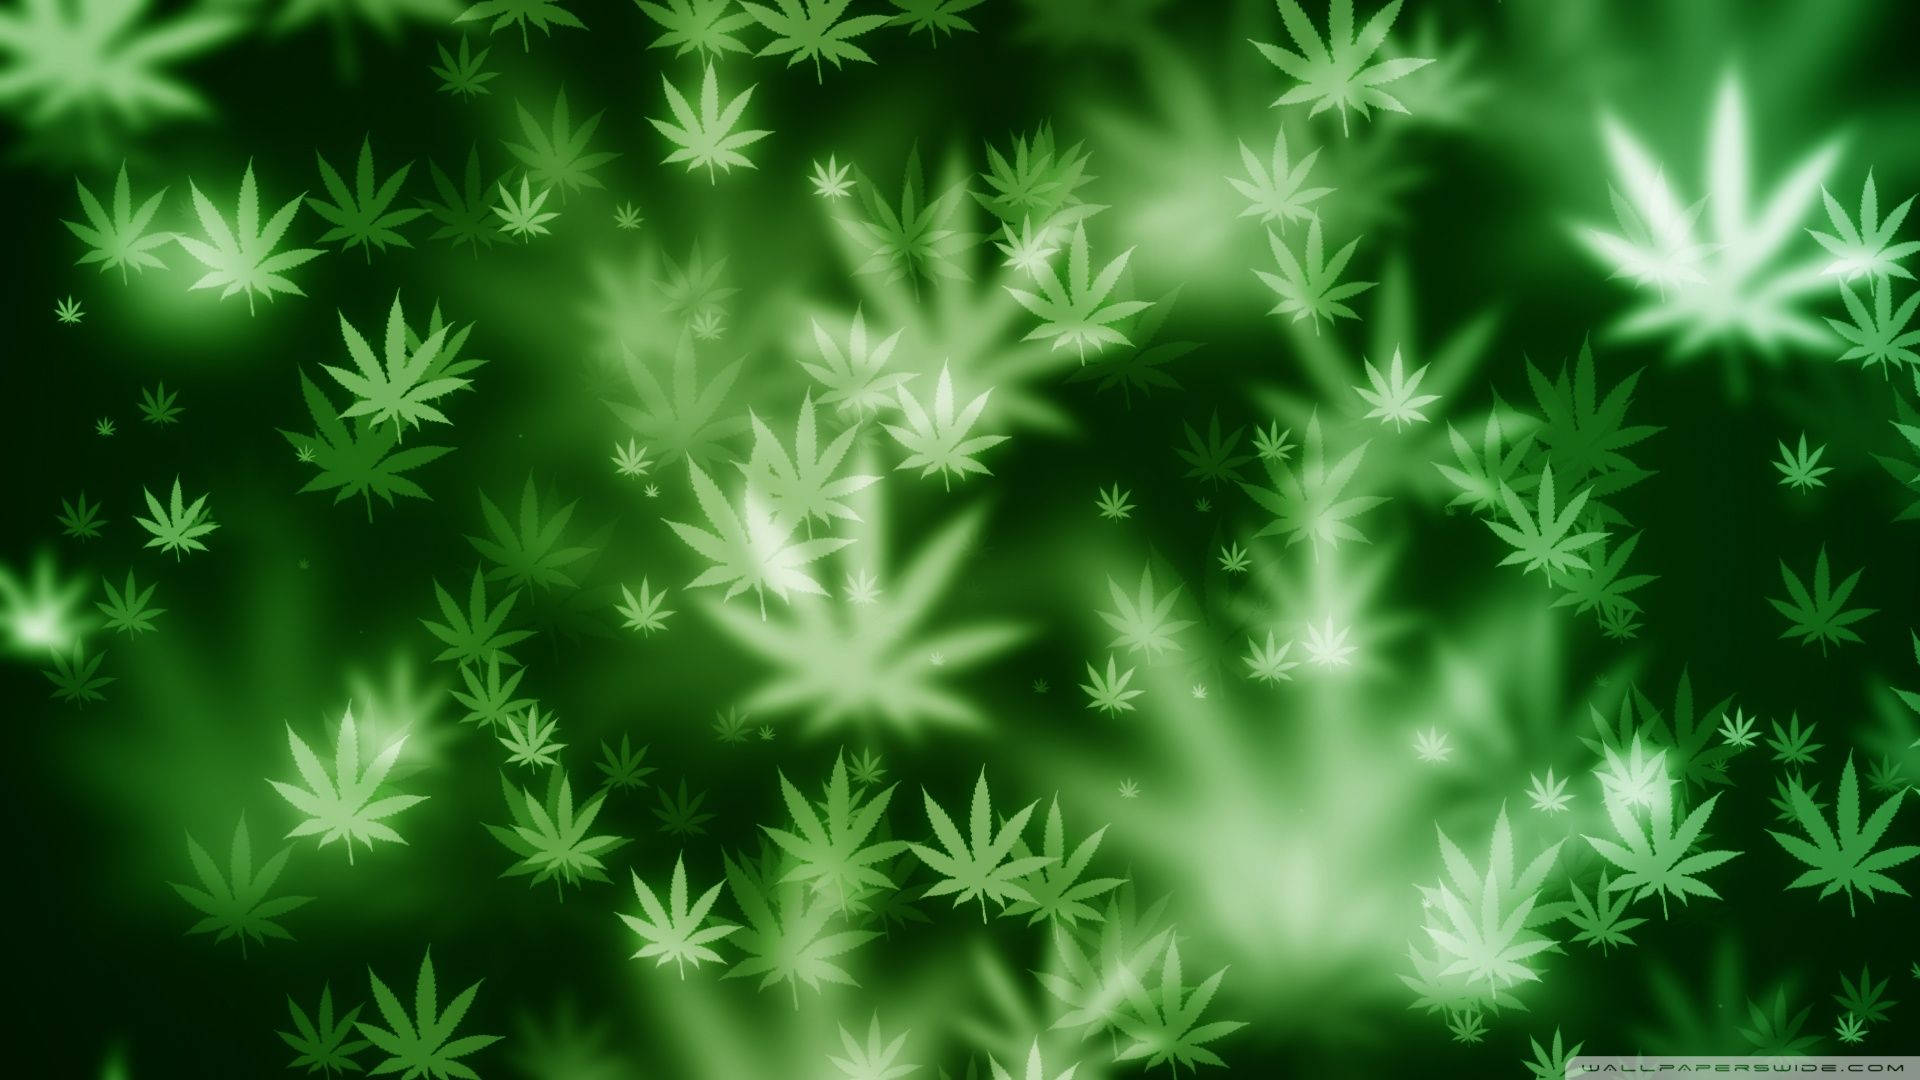 Caption: Vibrant Green Cannabis Leaf Wallpaper